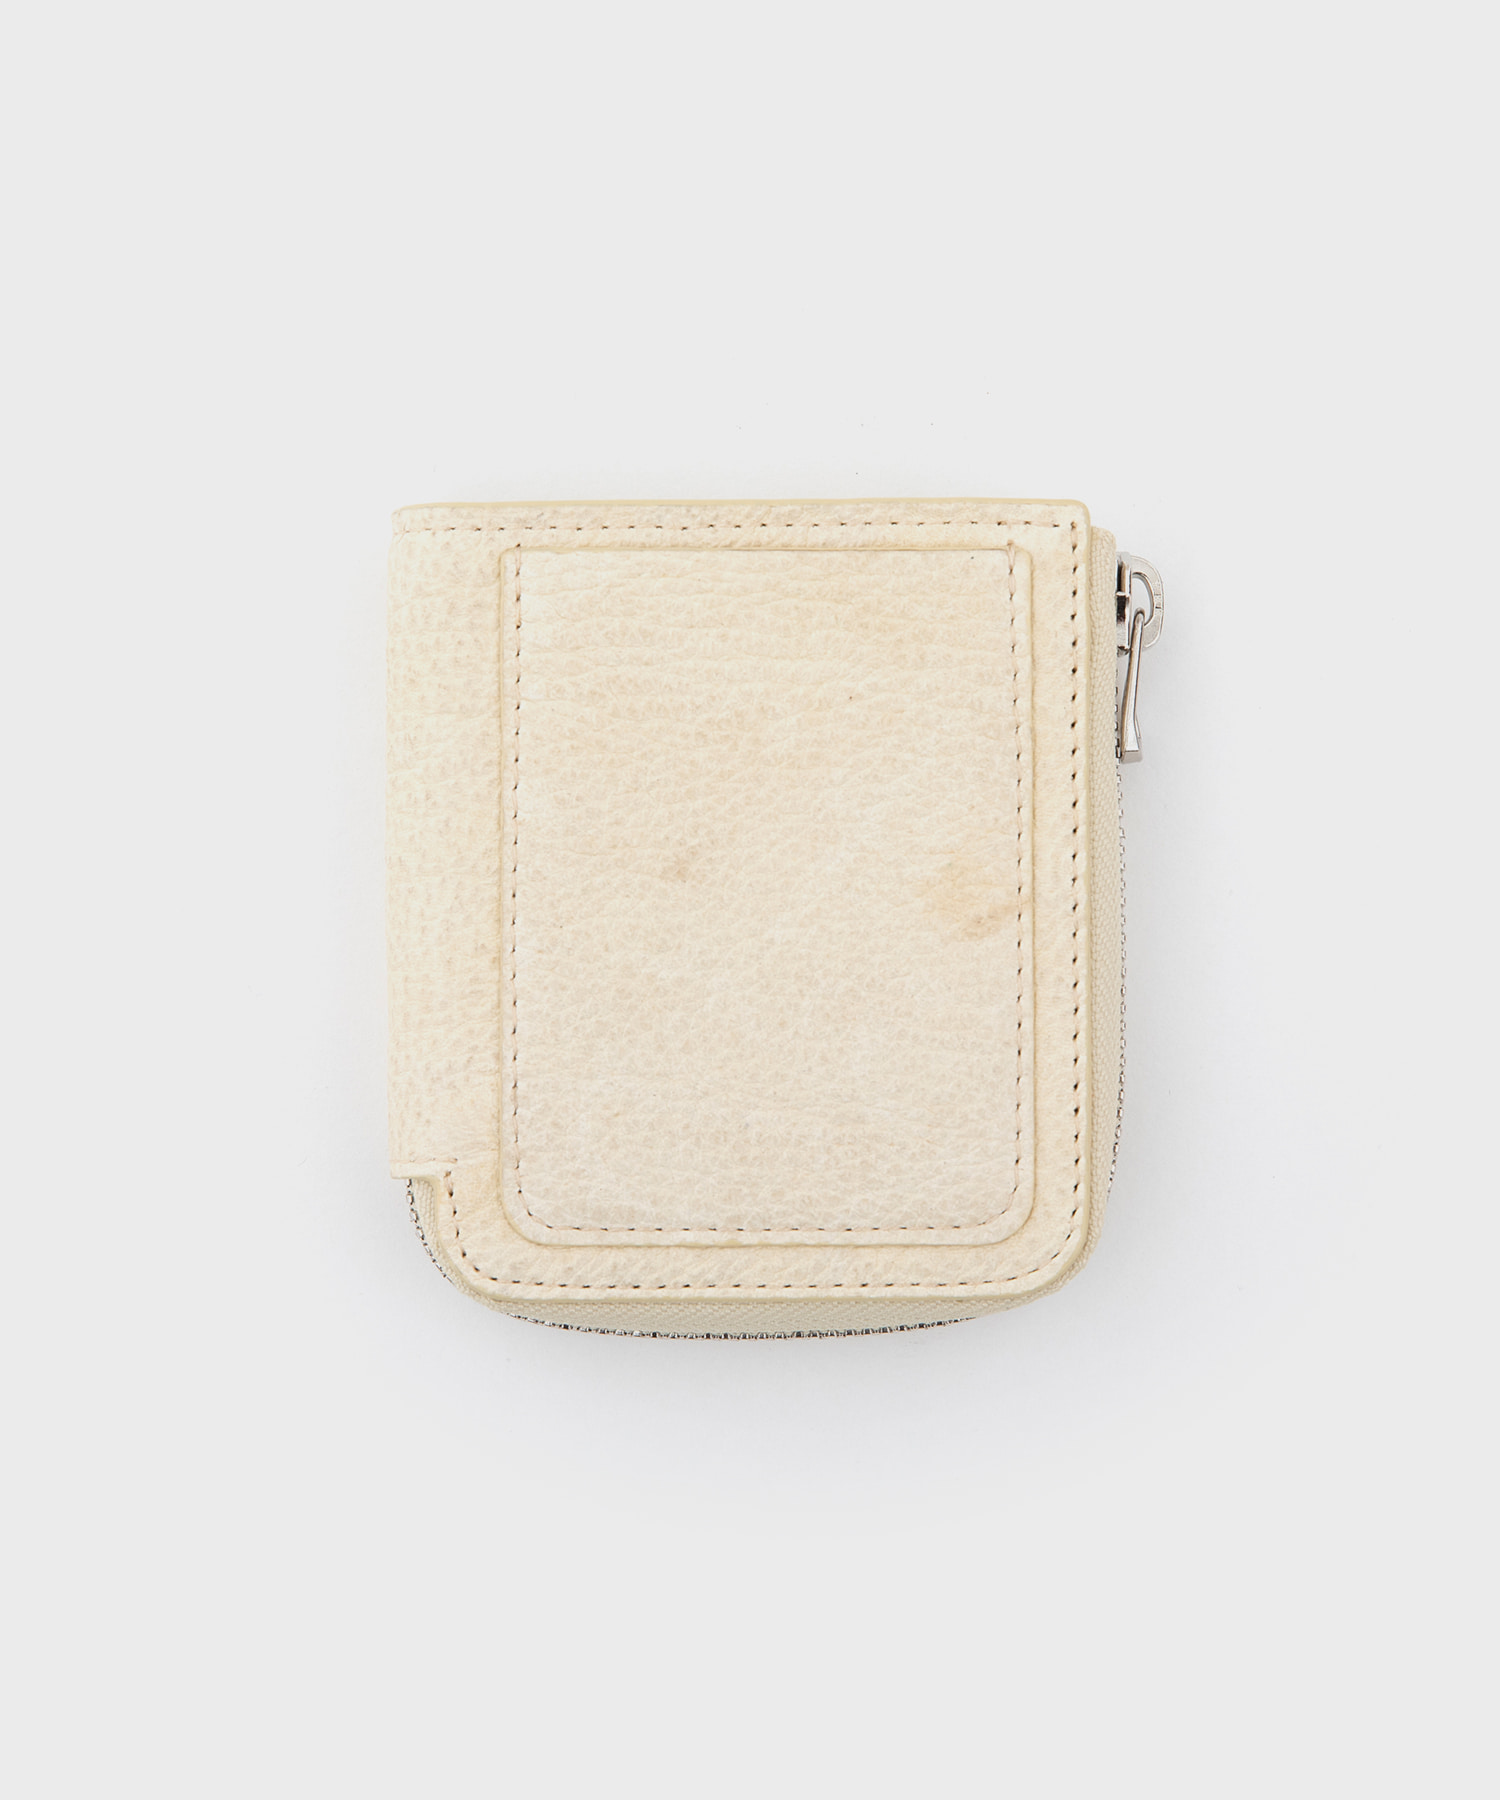 Cristy Very Compact Wallet .5 Shiro (Oatmeal)